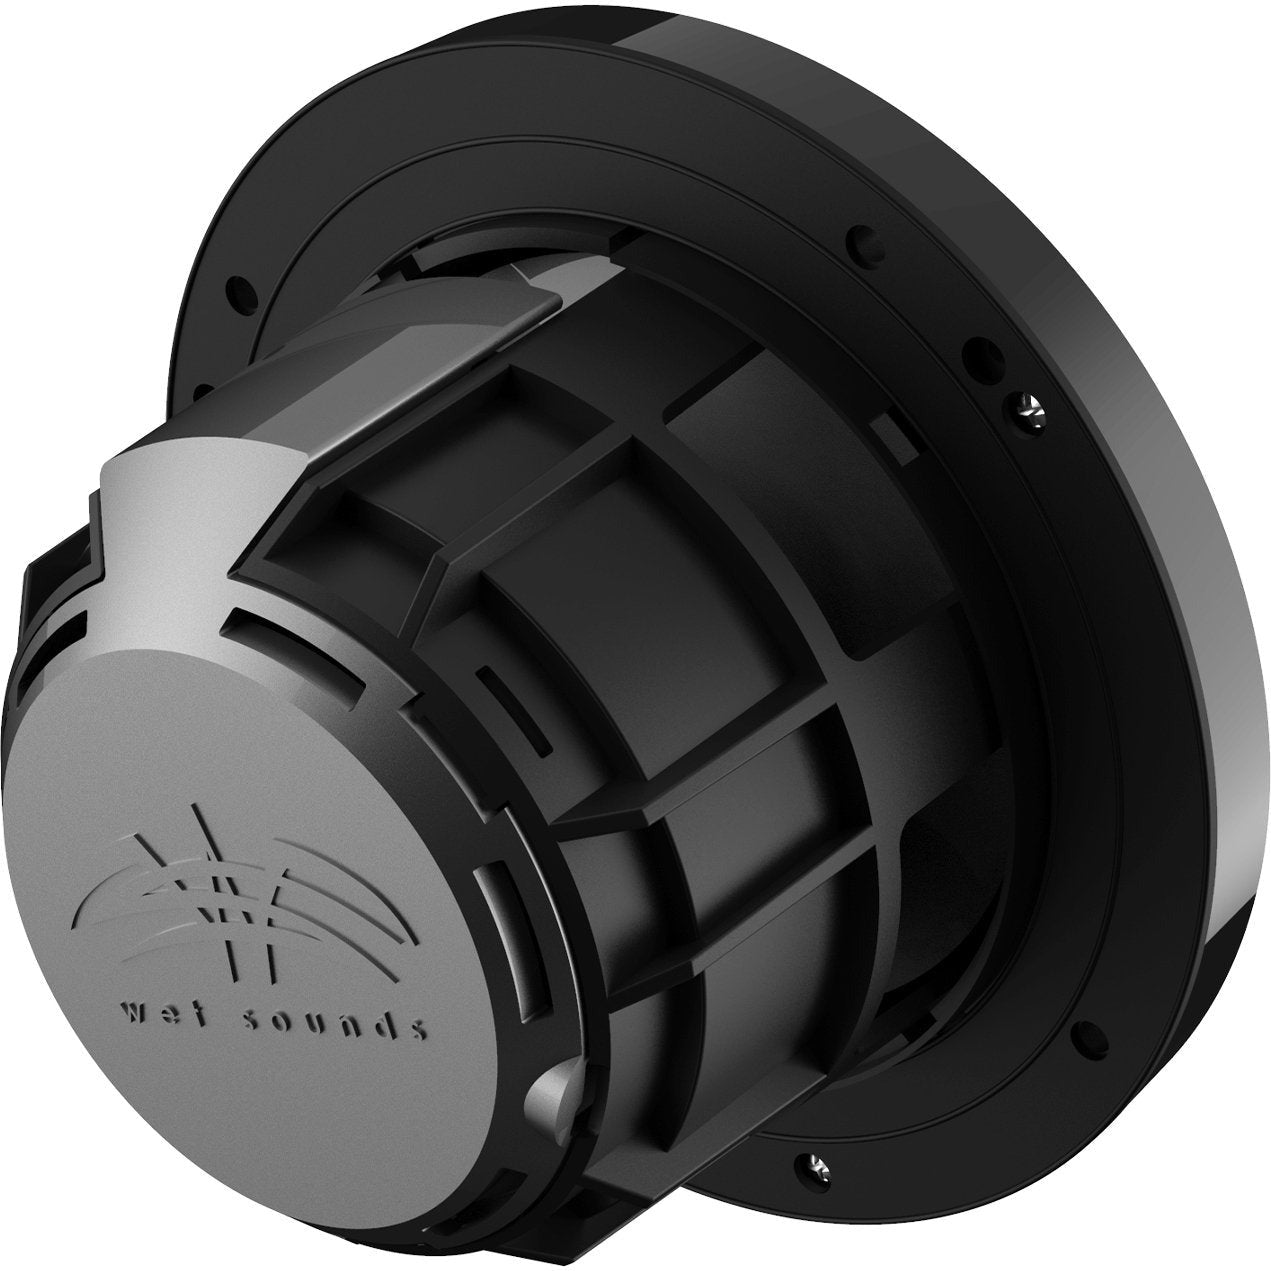 REVO 6 Marine 6.5" Coaxial Speakers (Pair)